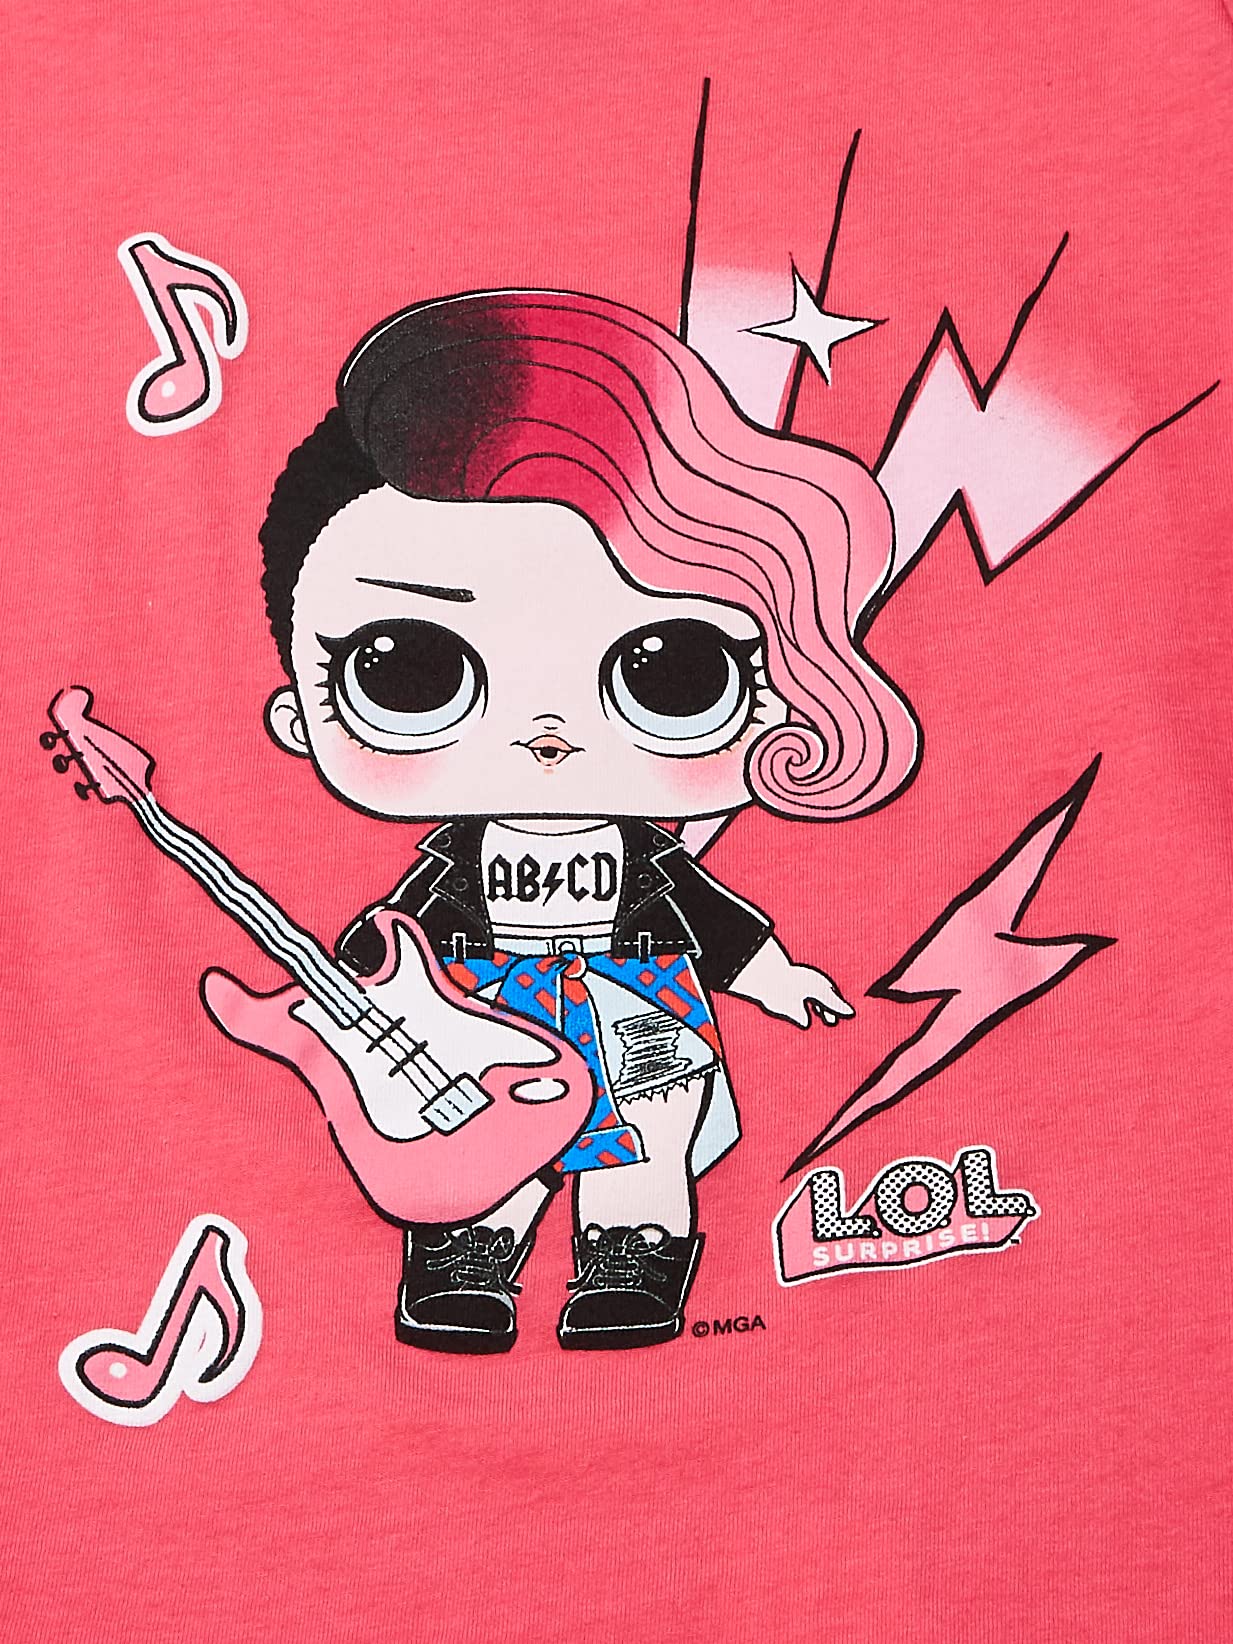 L.O.L. Surprise! Girls' Big Glee Club Rocker Short Sleeve T-Shirt